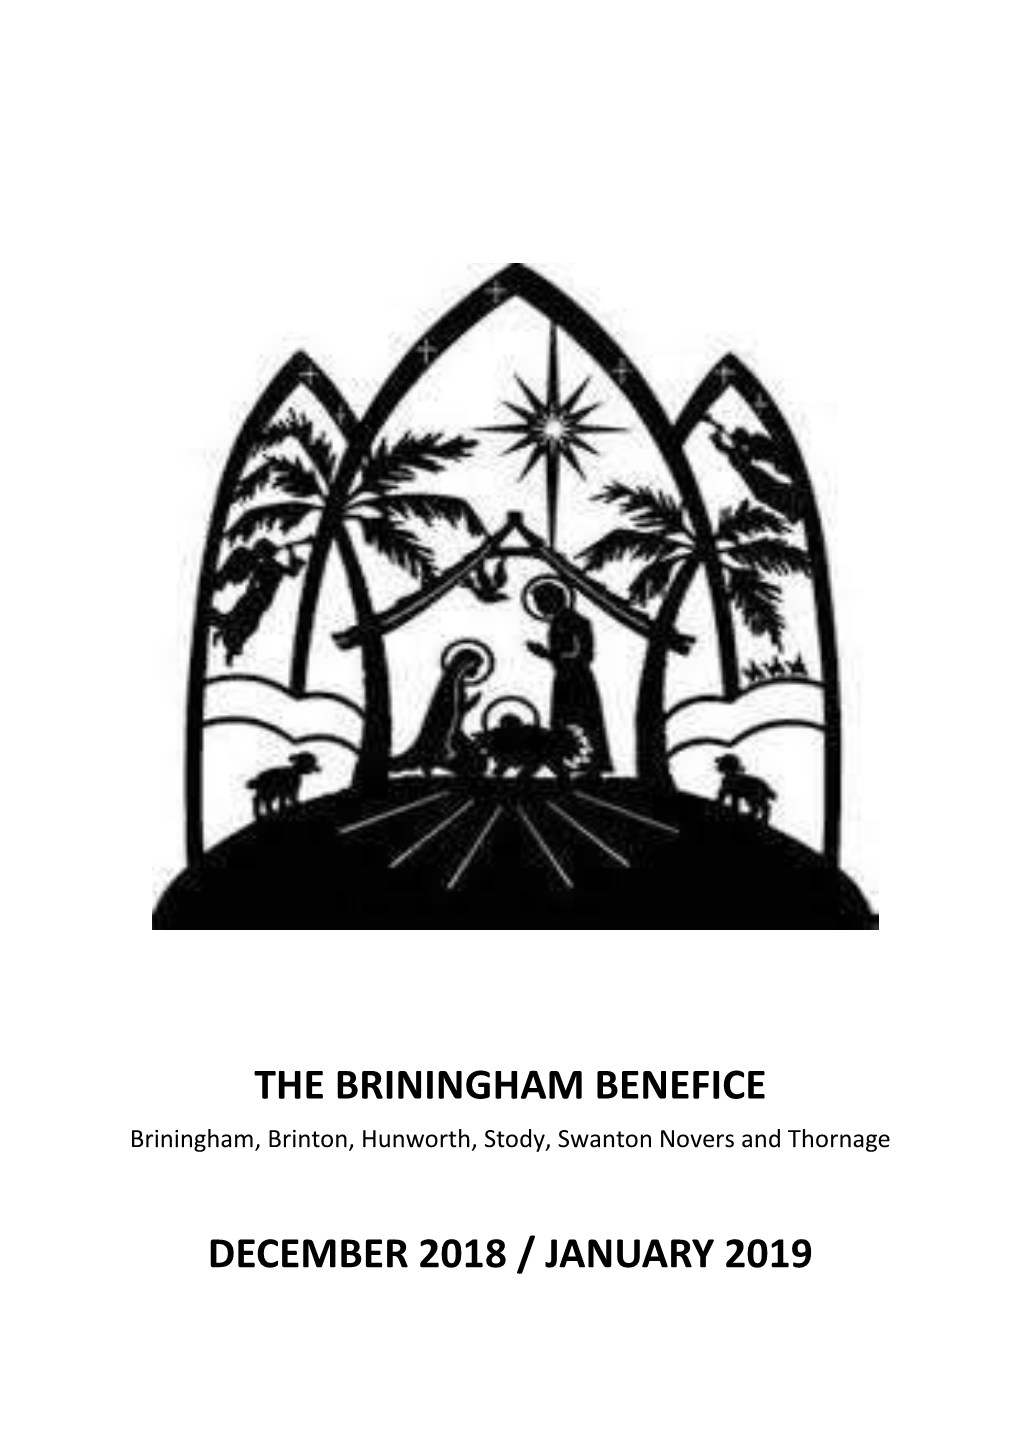 The Briningham Benefice December 2018 / January 2019